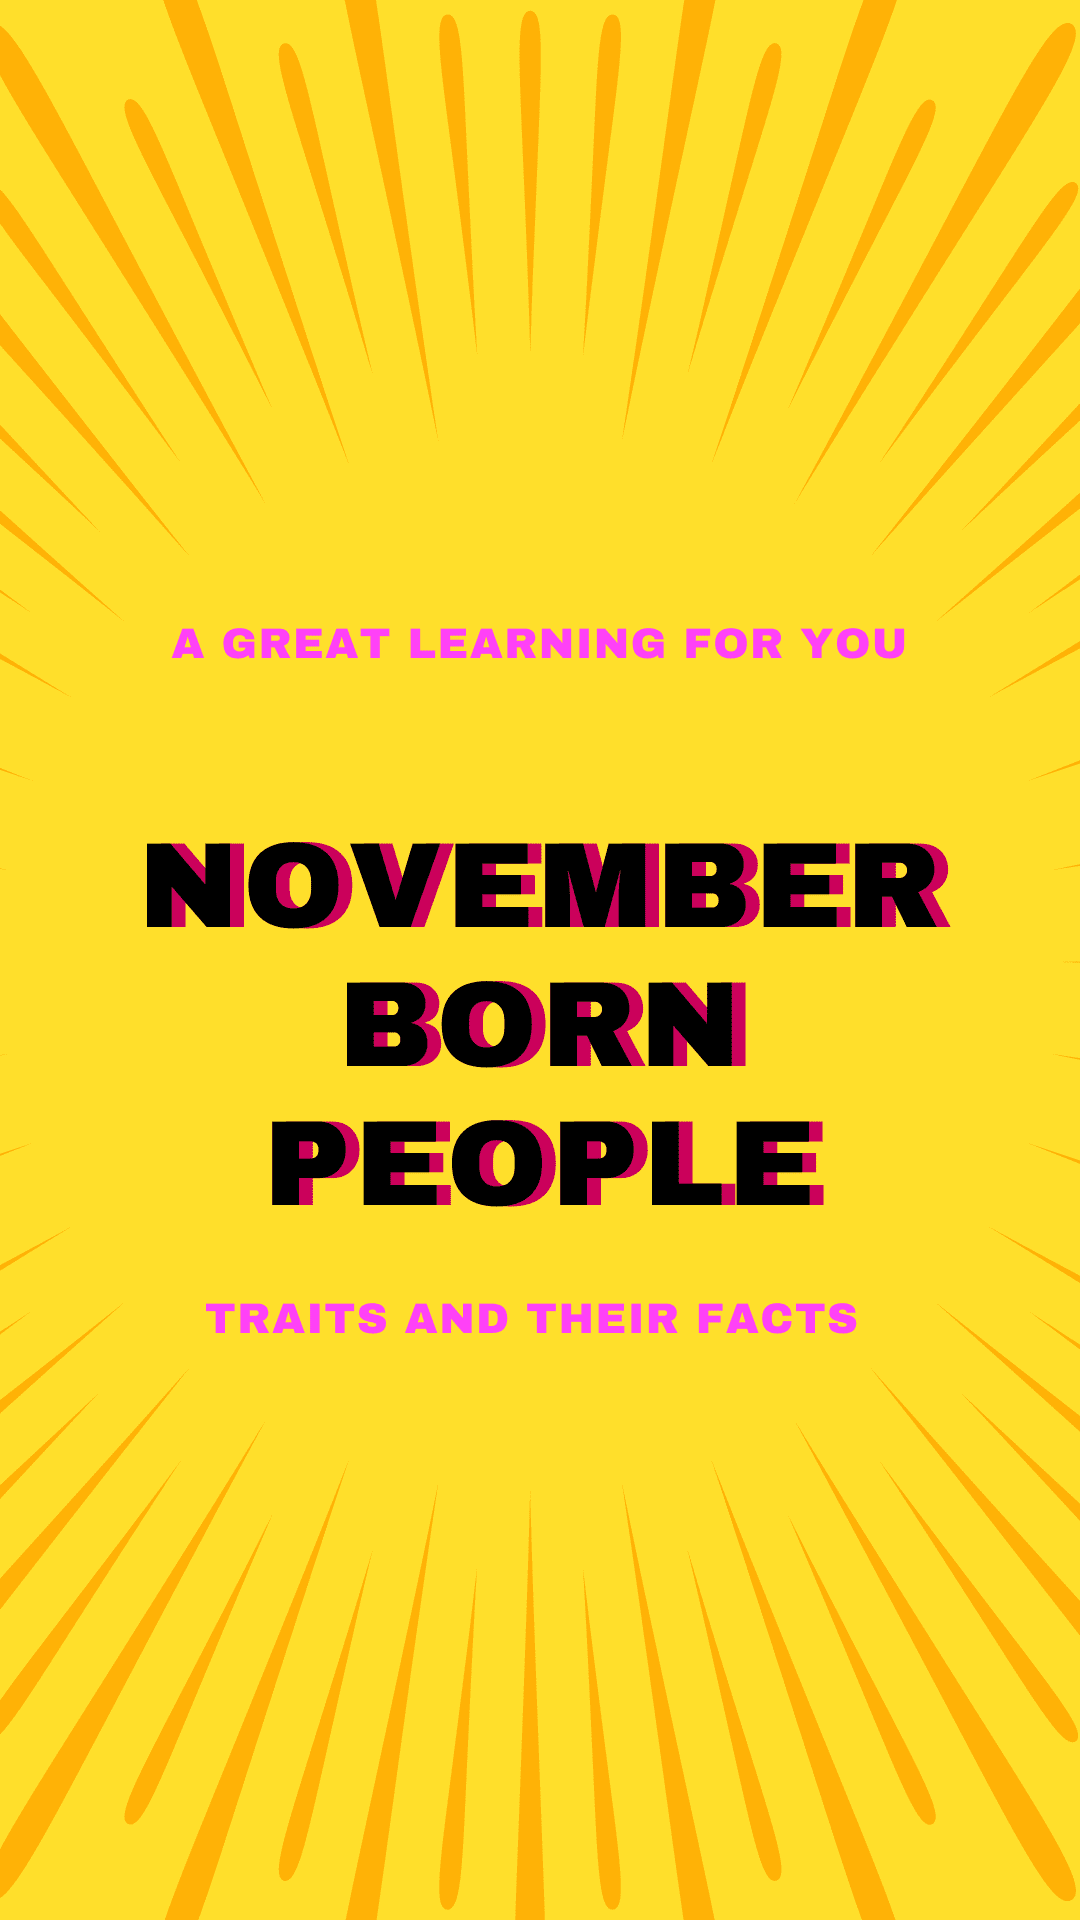 November born people